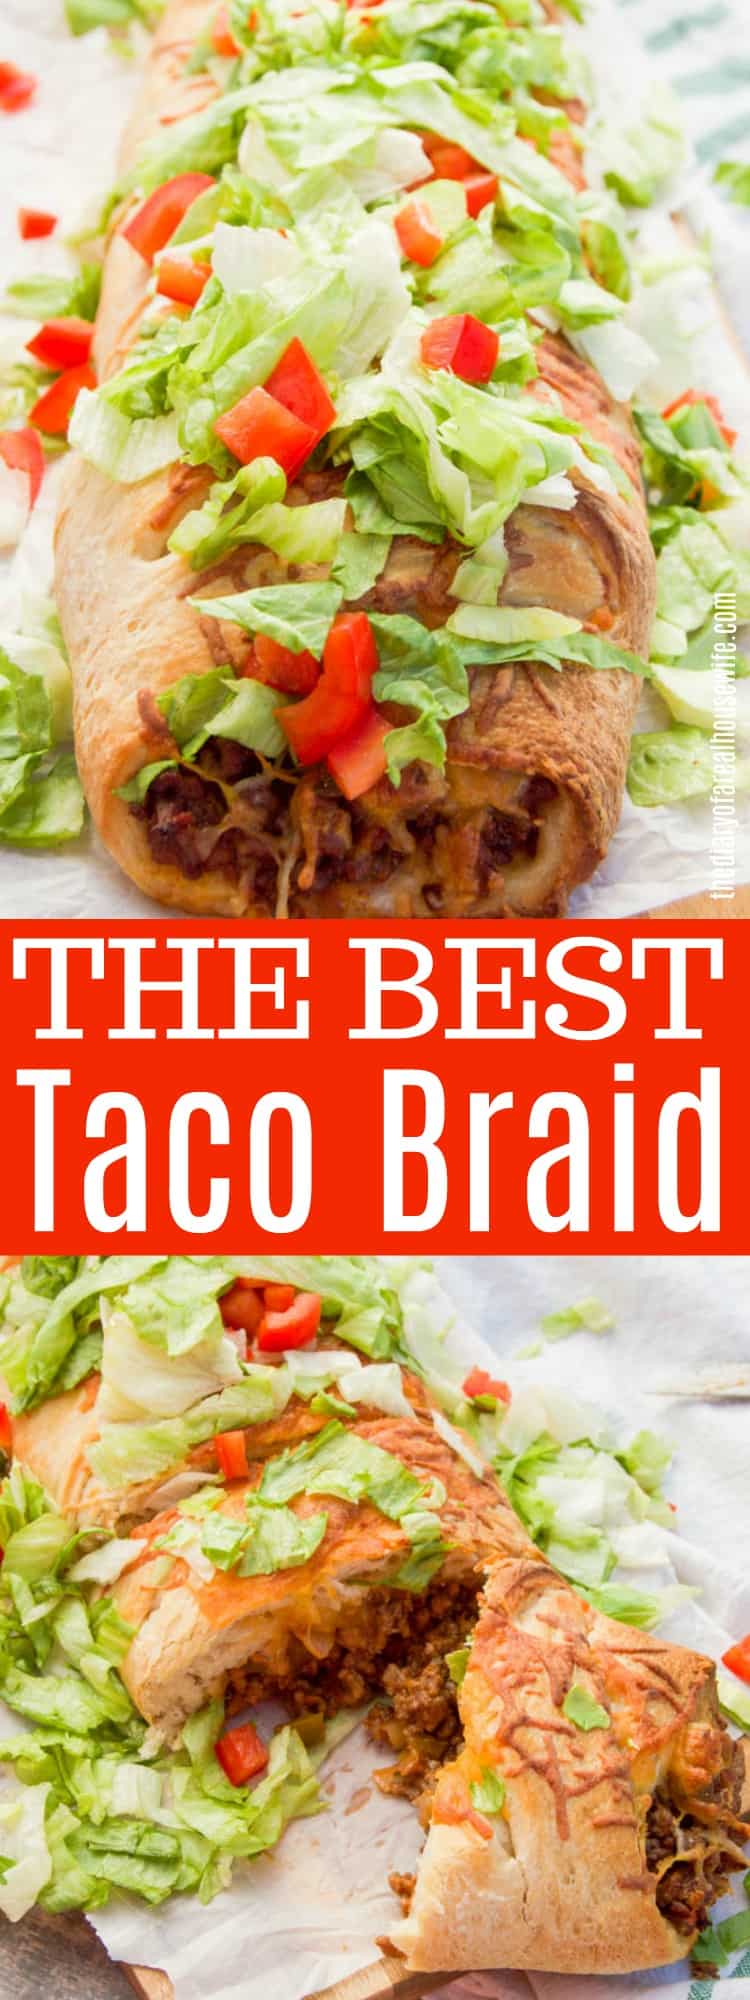 Taco Braid